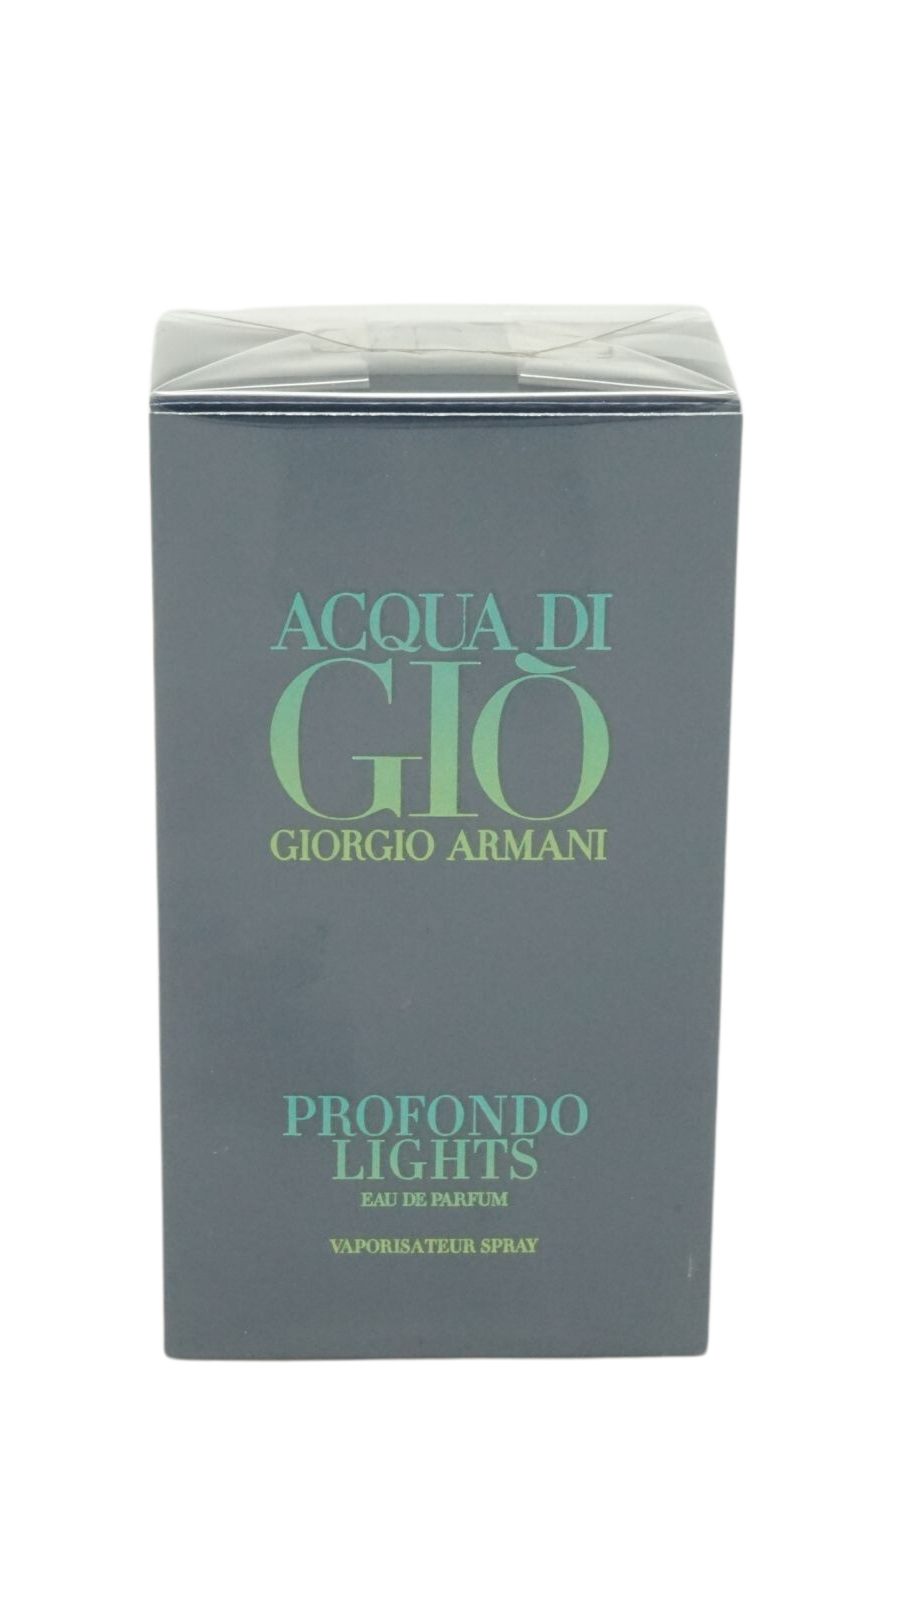 Giorgio Armani Eau de Toilette Giorgio Armani Acqua di Gio Profondo Lights Eau de parfum 40ml